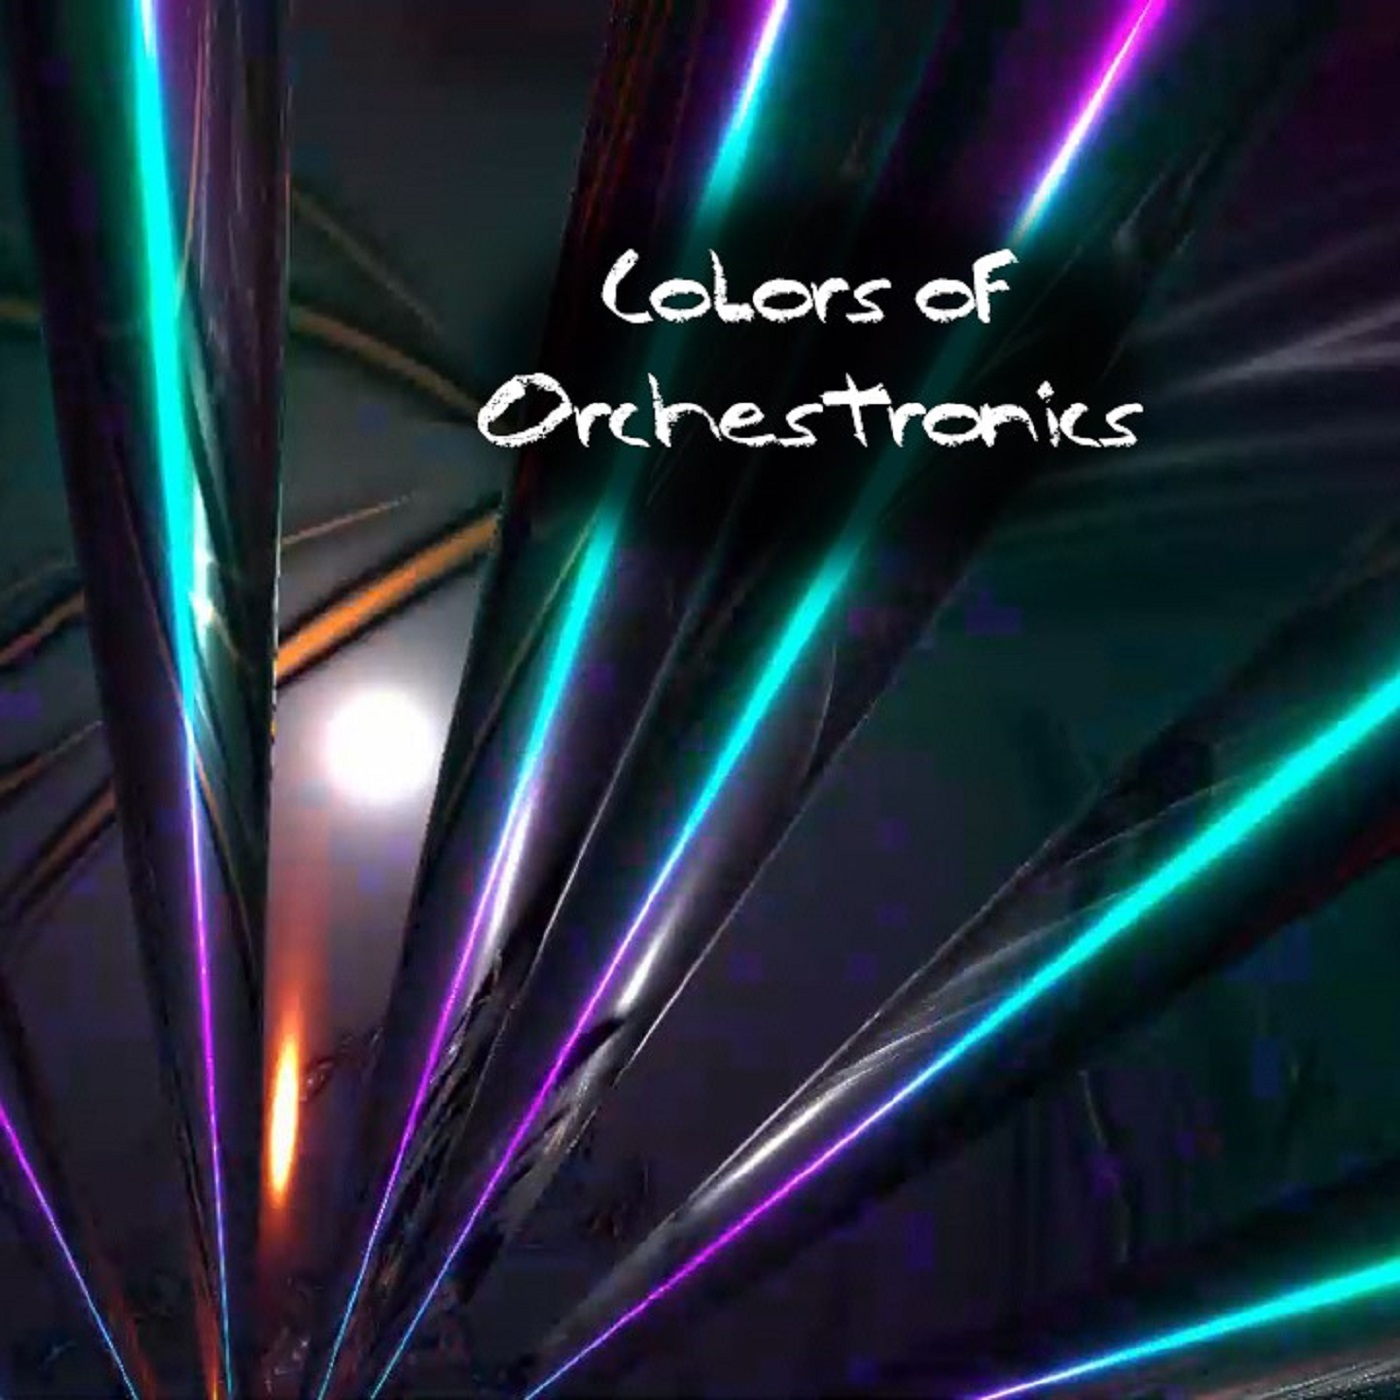 Colors of Orchestronics - Album